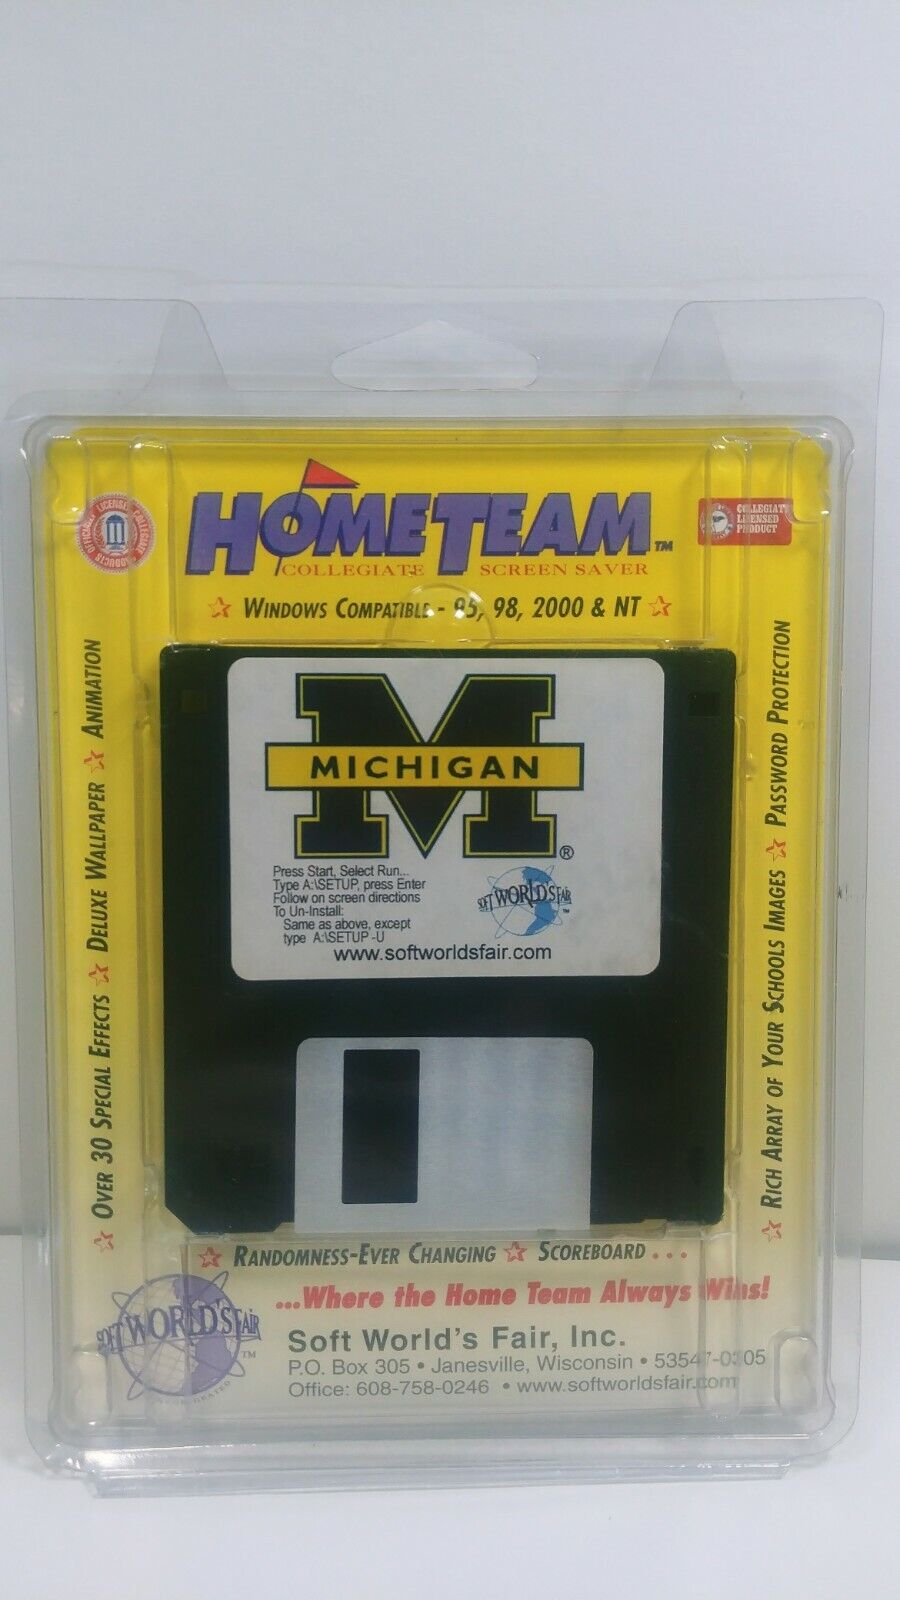 Vintage Home Team Collegiate Screen Saver Floppy Disk - University of Michigan 